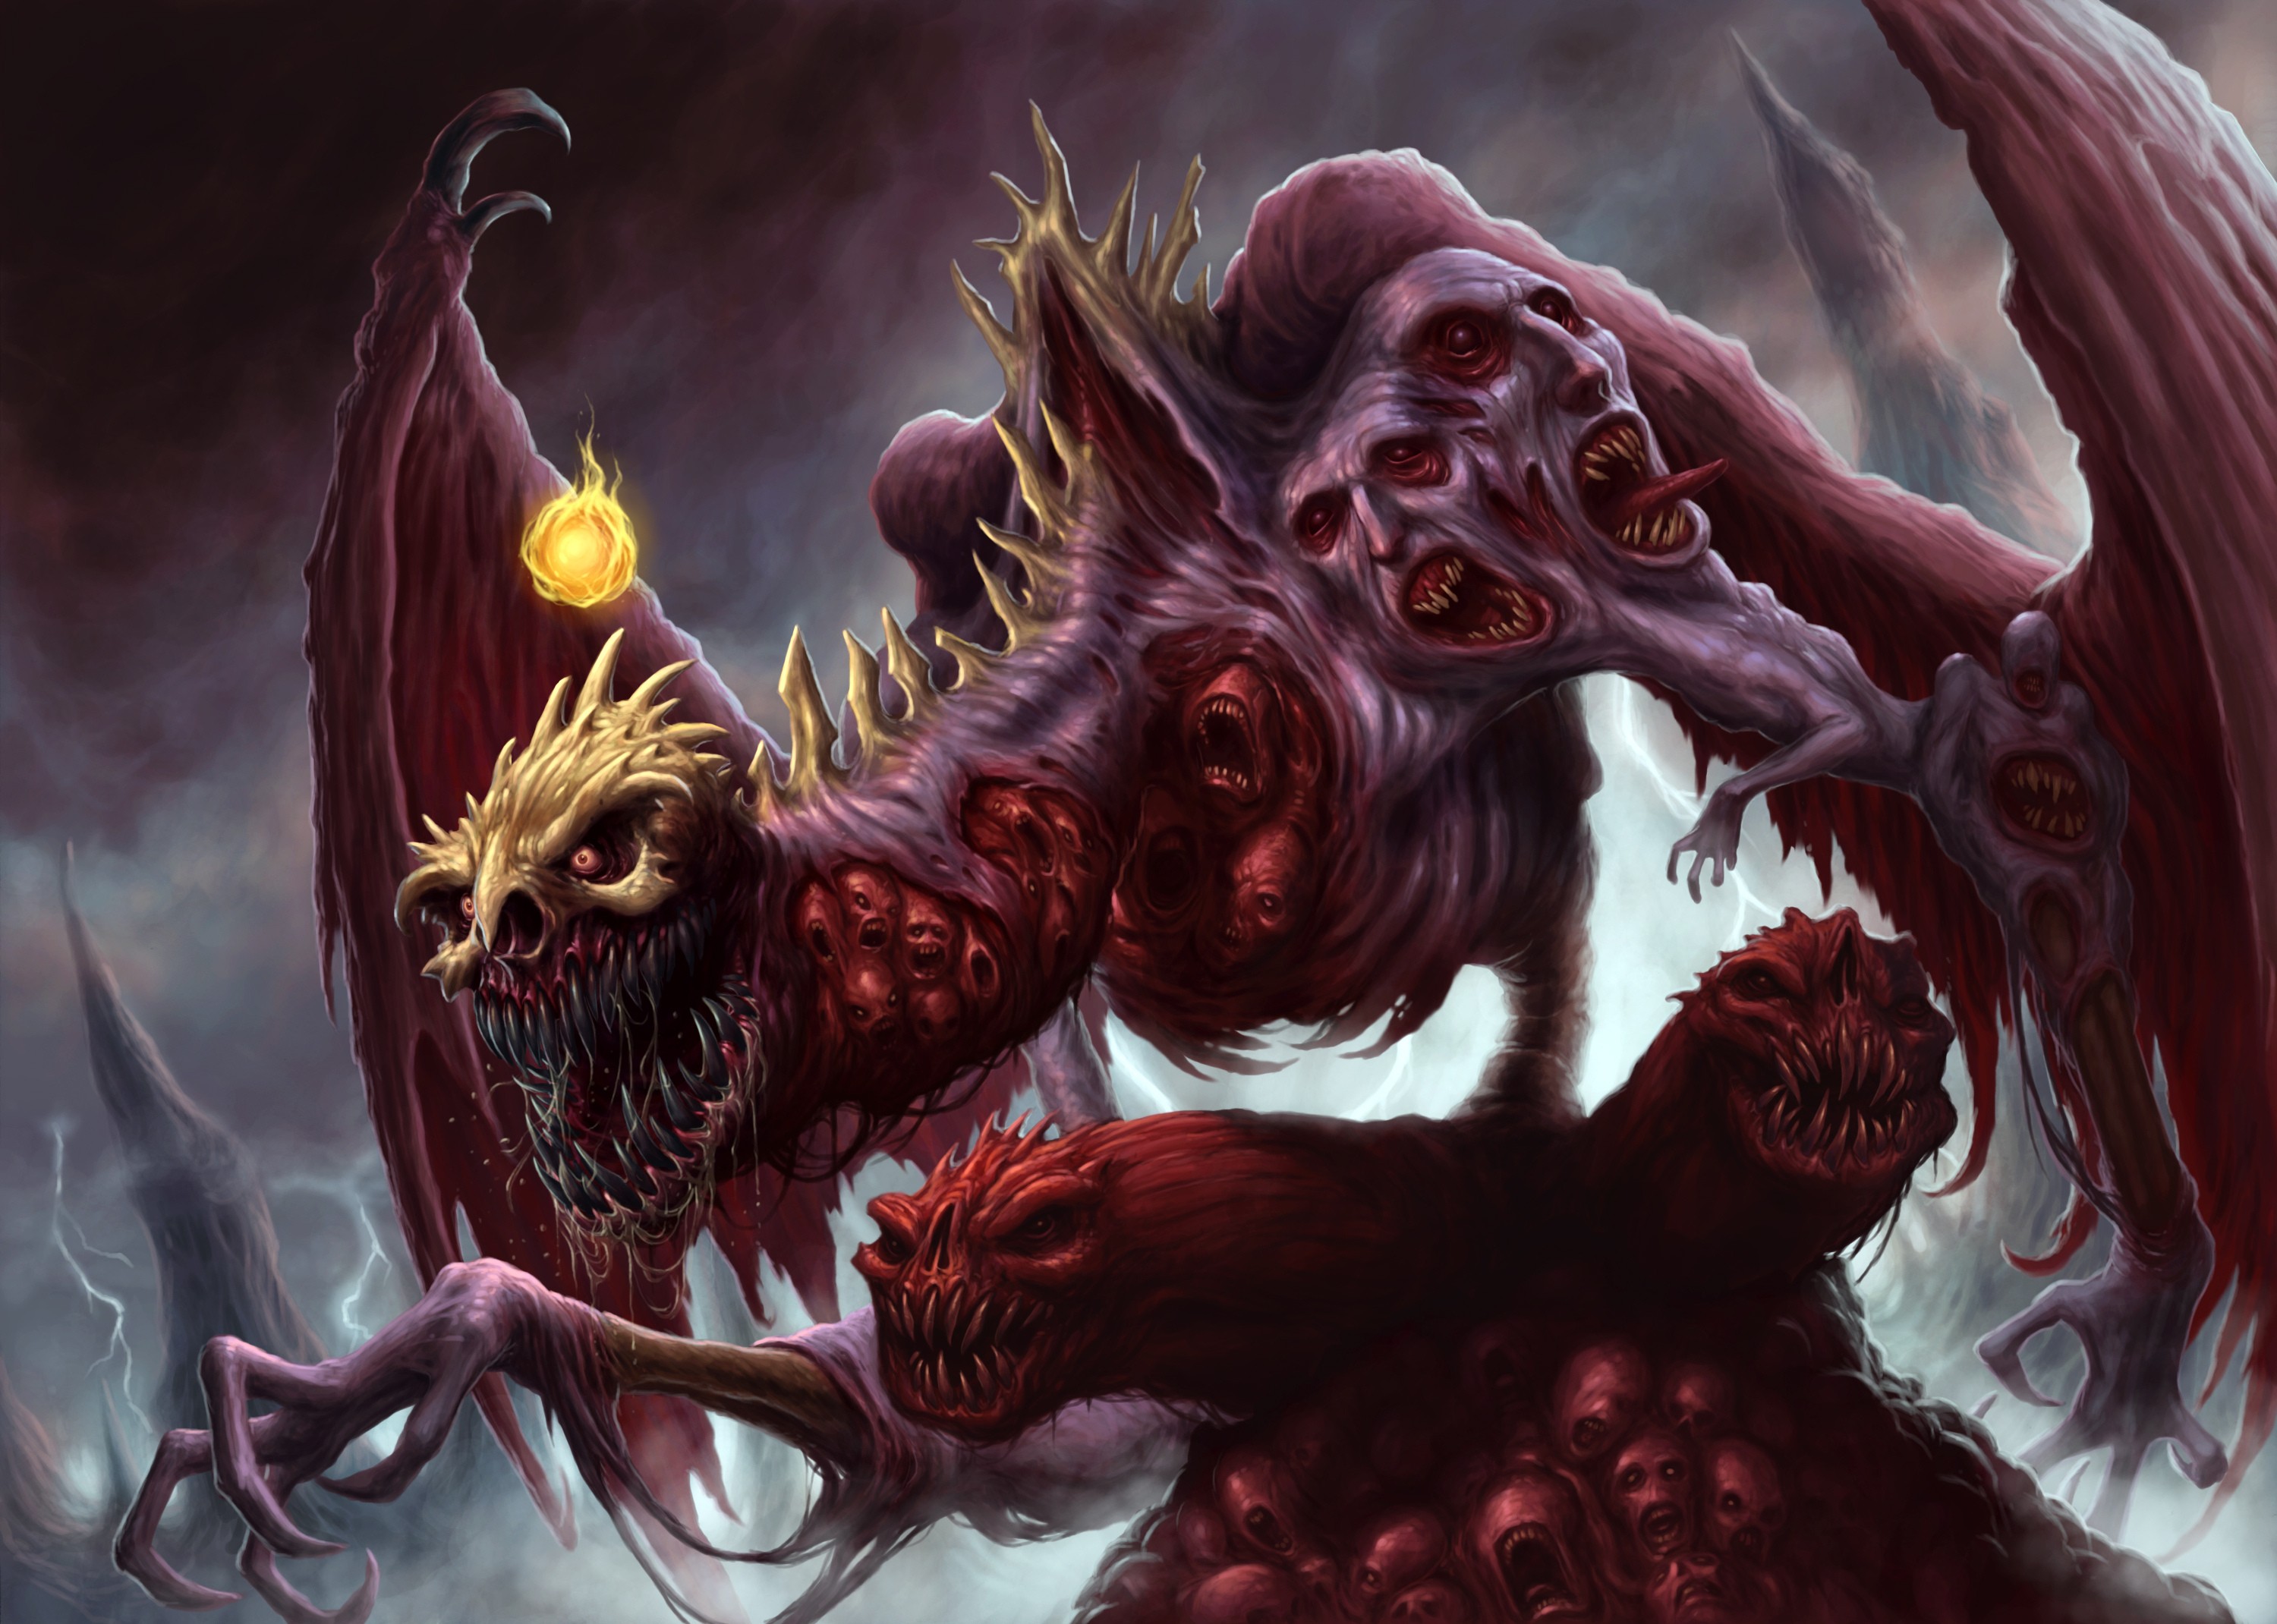 Fantasy Art Digital Art Dark Creature Face Skull Wings Surreal Teeth Fireballs 3000x2140